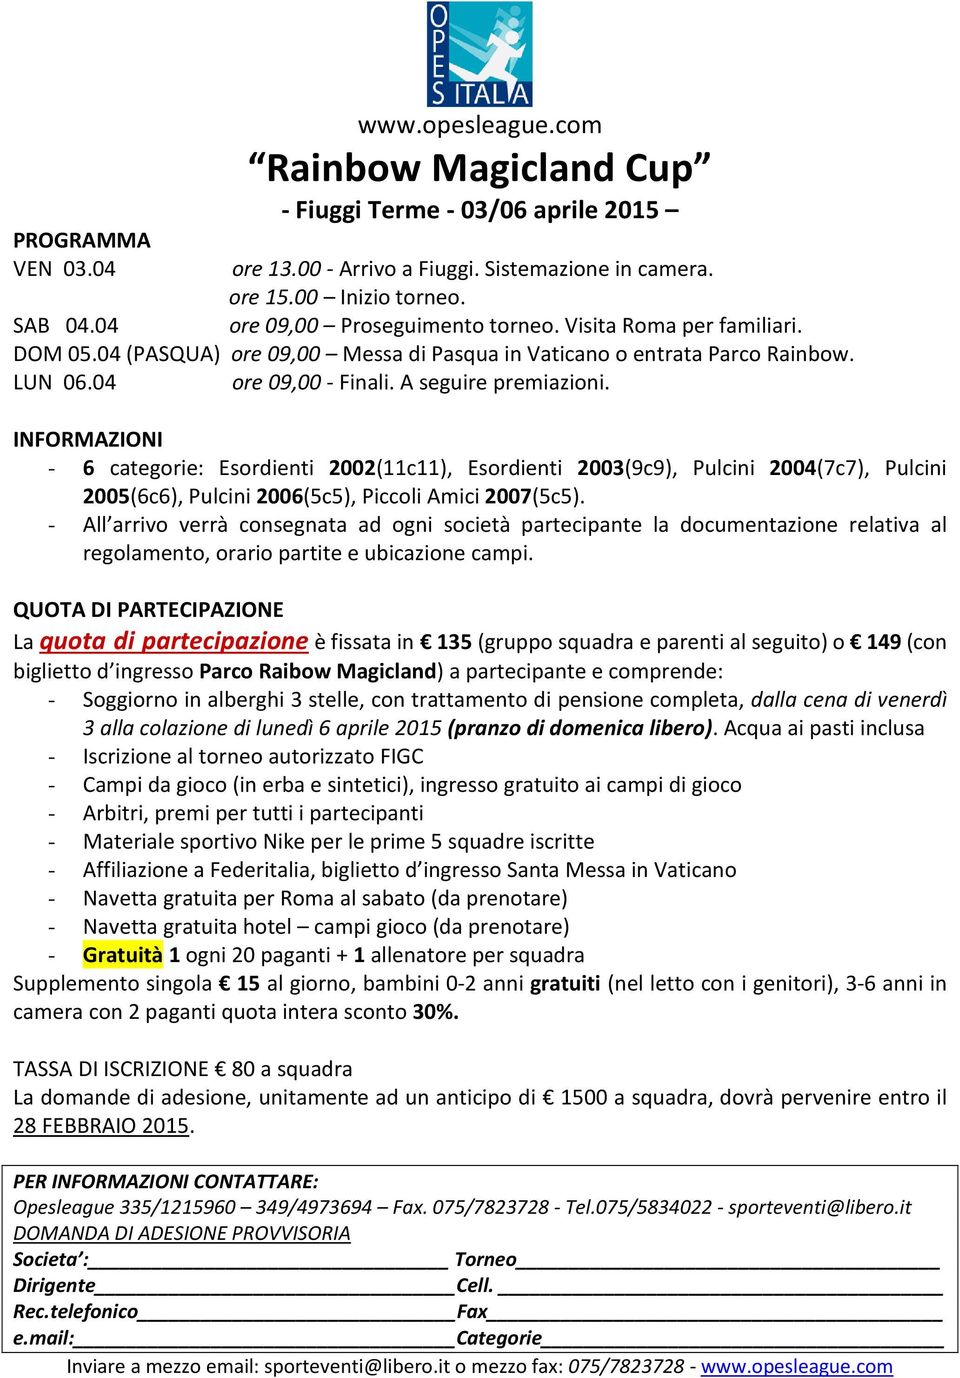 - 6 categorie: Esordienti 2002(11c11), Esordienti 2003(9c9), Pulcini 2004(7c7), Pulcini 2005(6c6), Pulcini 2006(5c5), Piccoli Amici 2007(5c5).